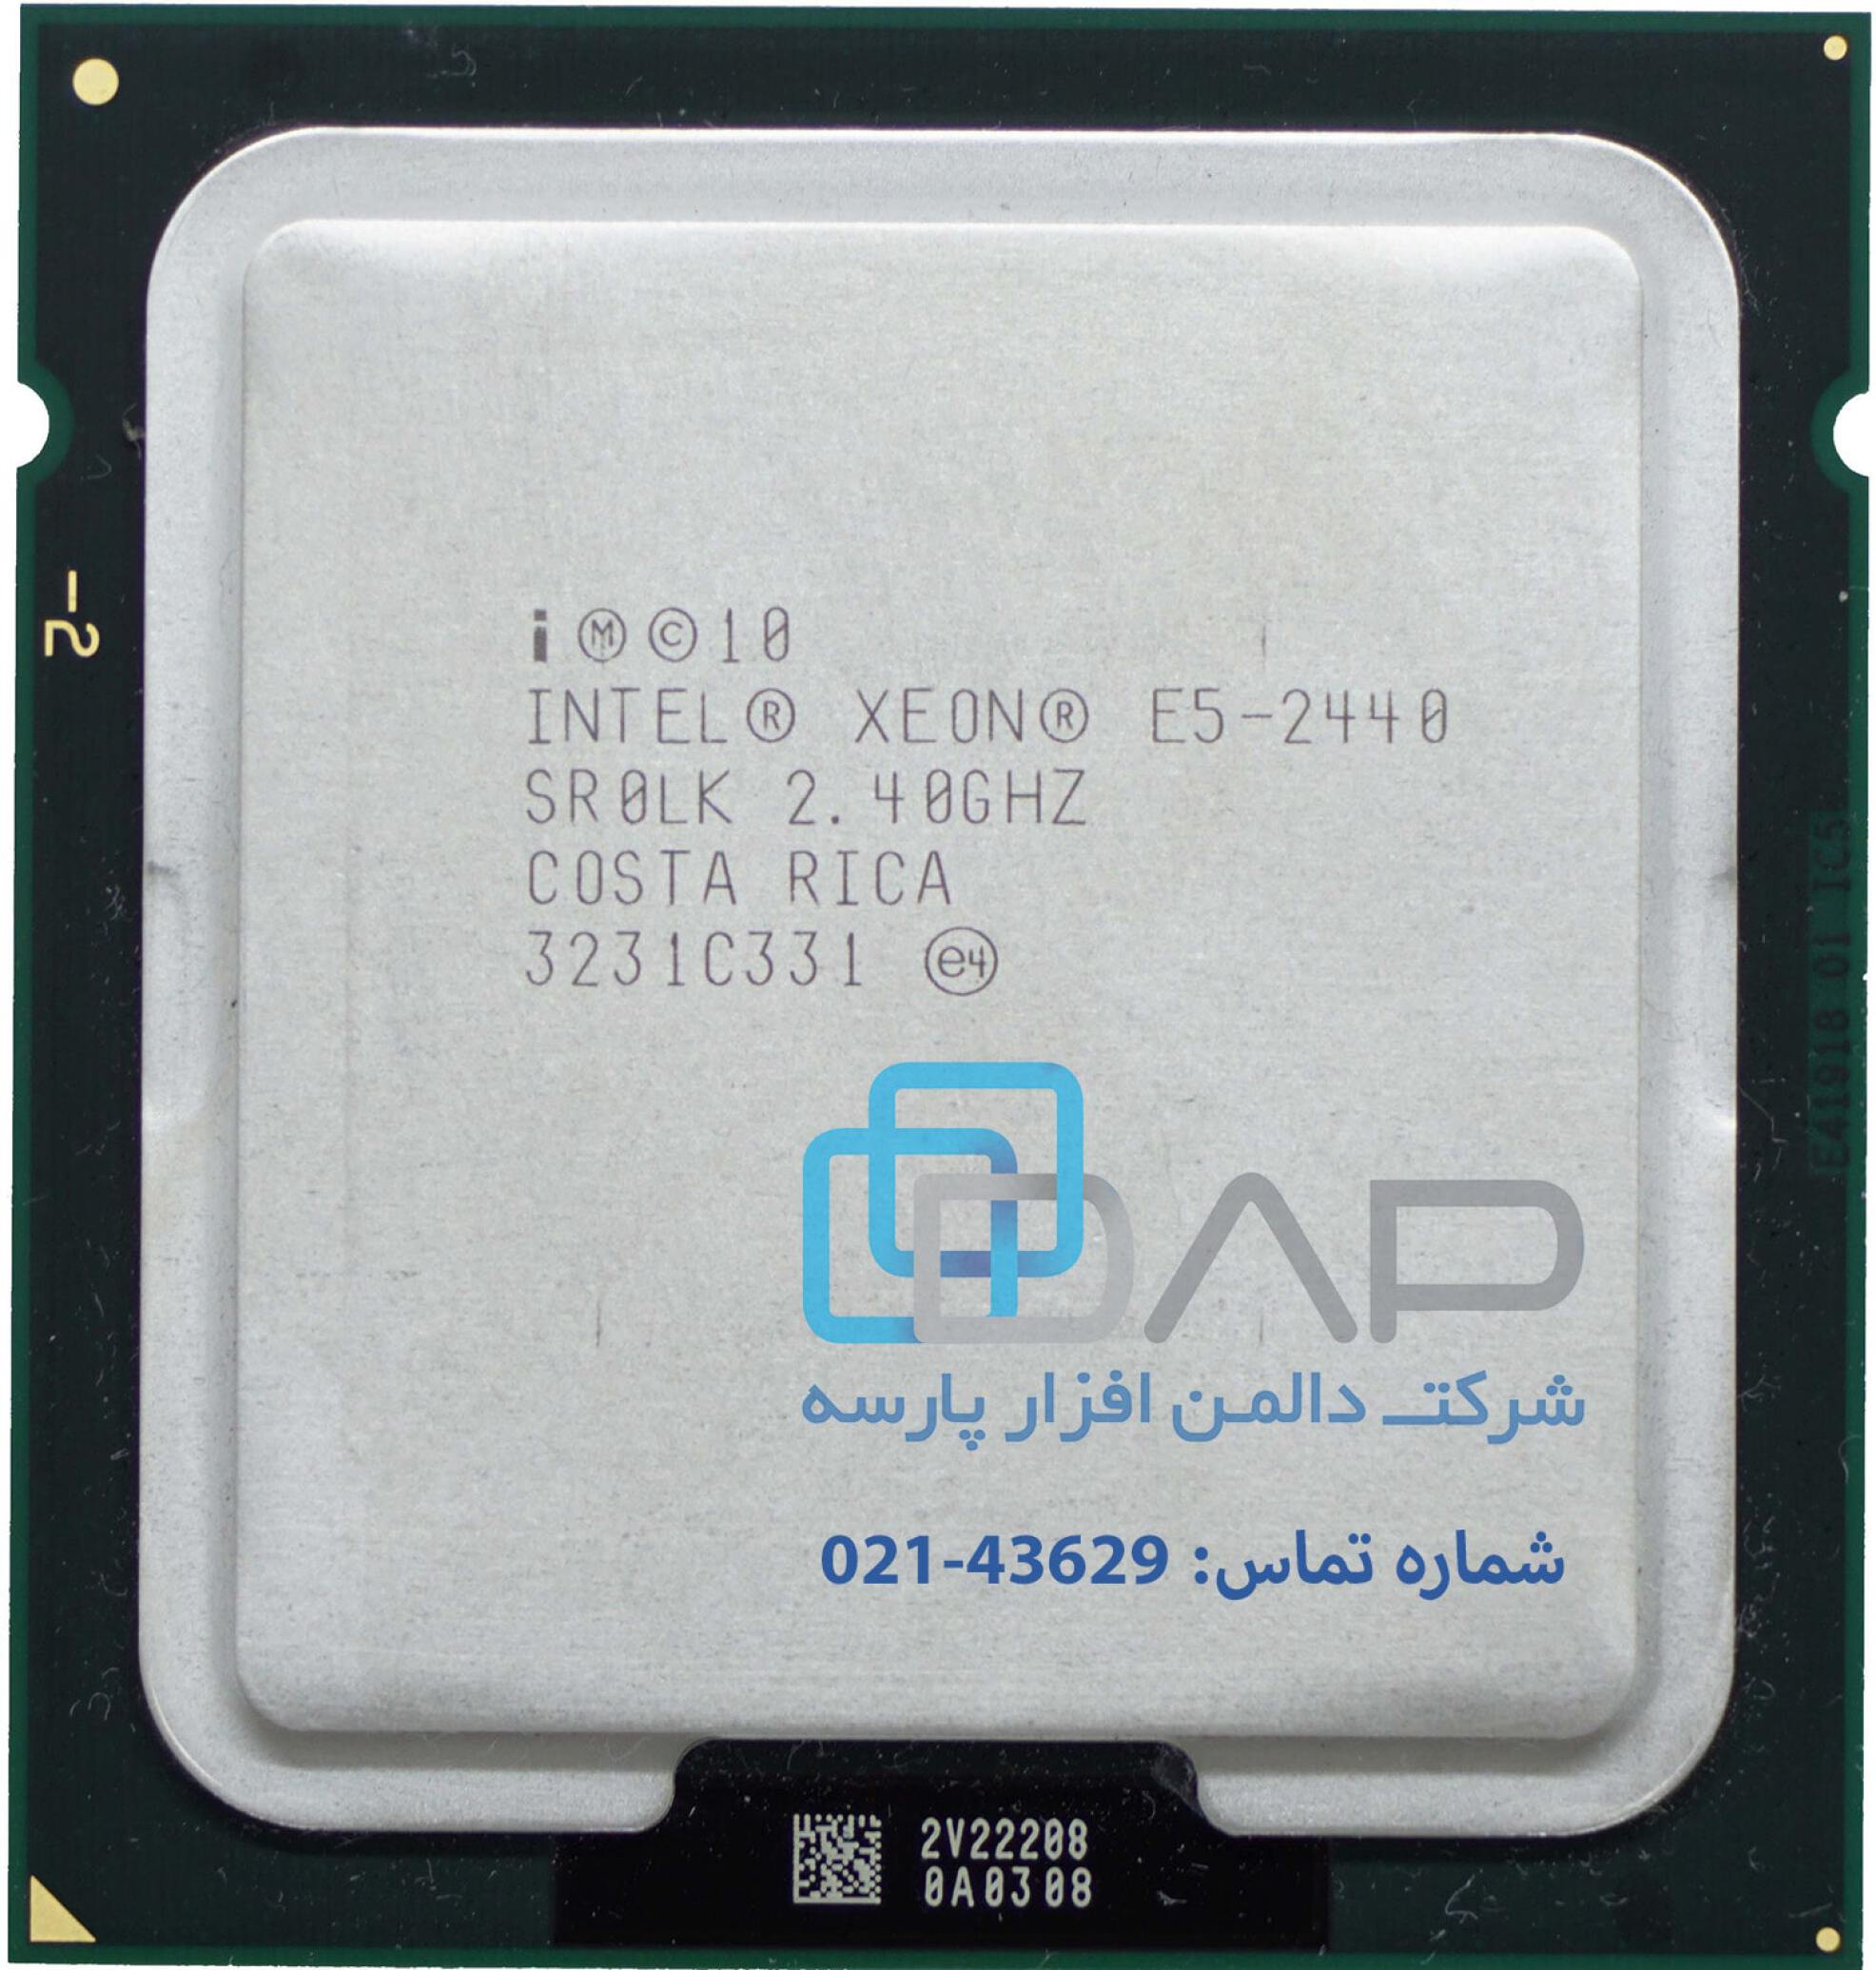  Intel CPU (Xeon® E5-2440) 